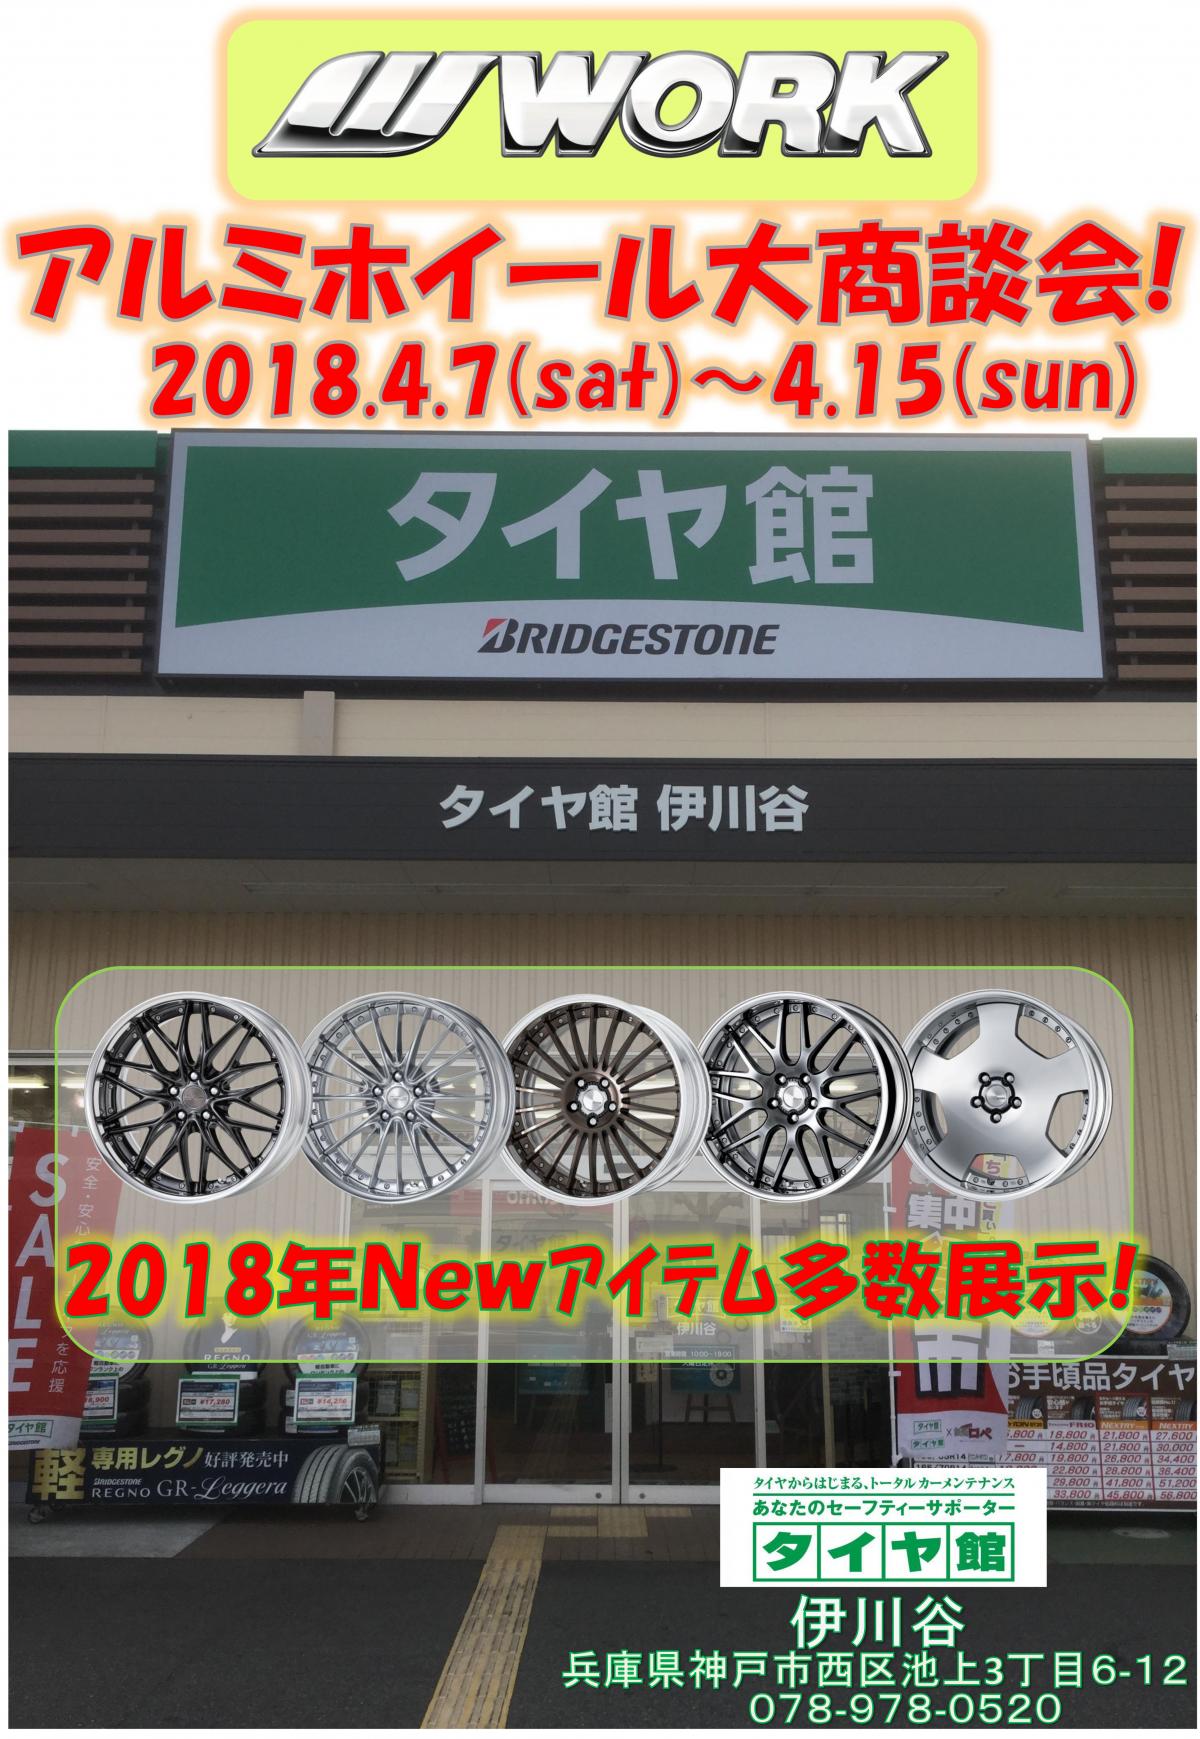 WORK Wheel big business meeting in Tire Hall Ichigaya branch